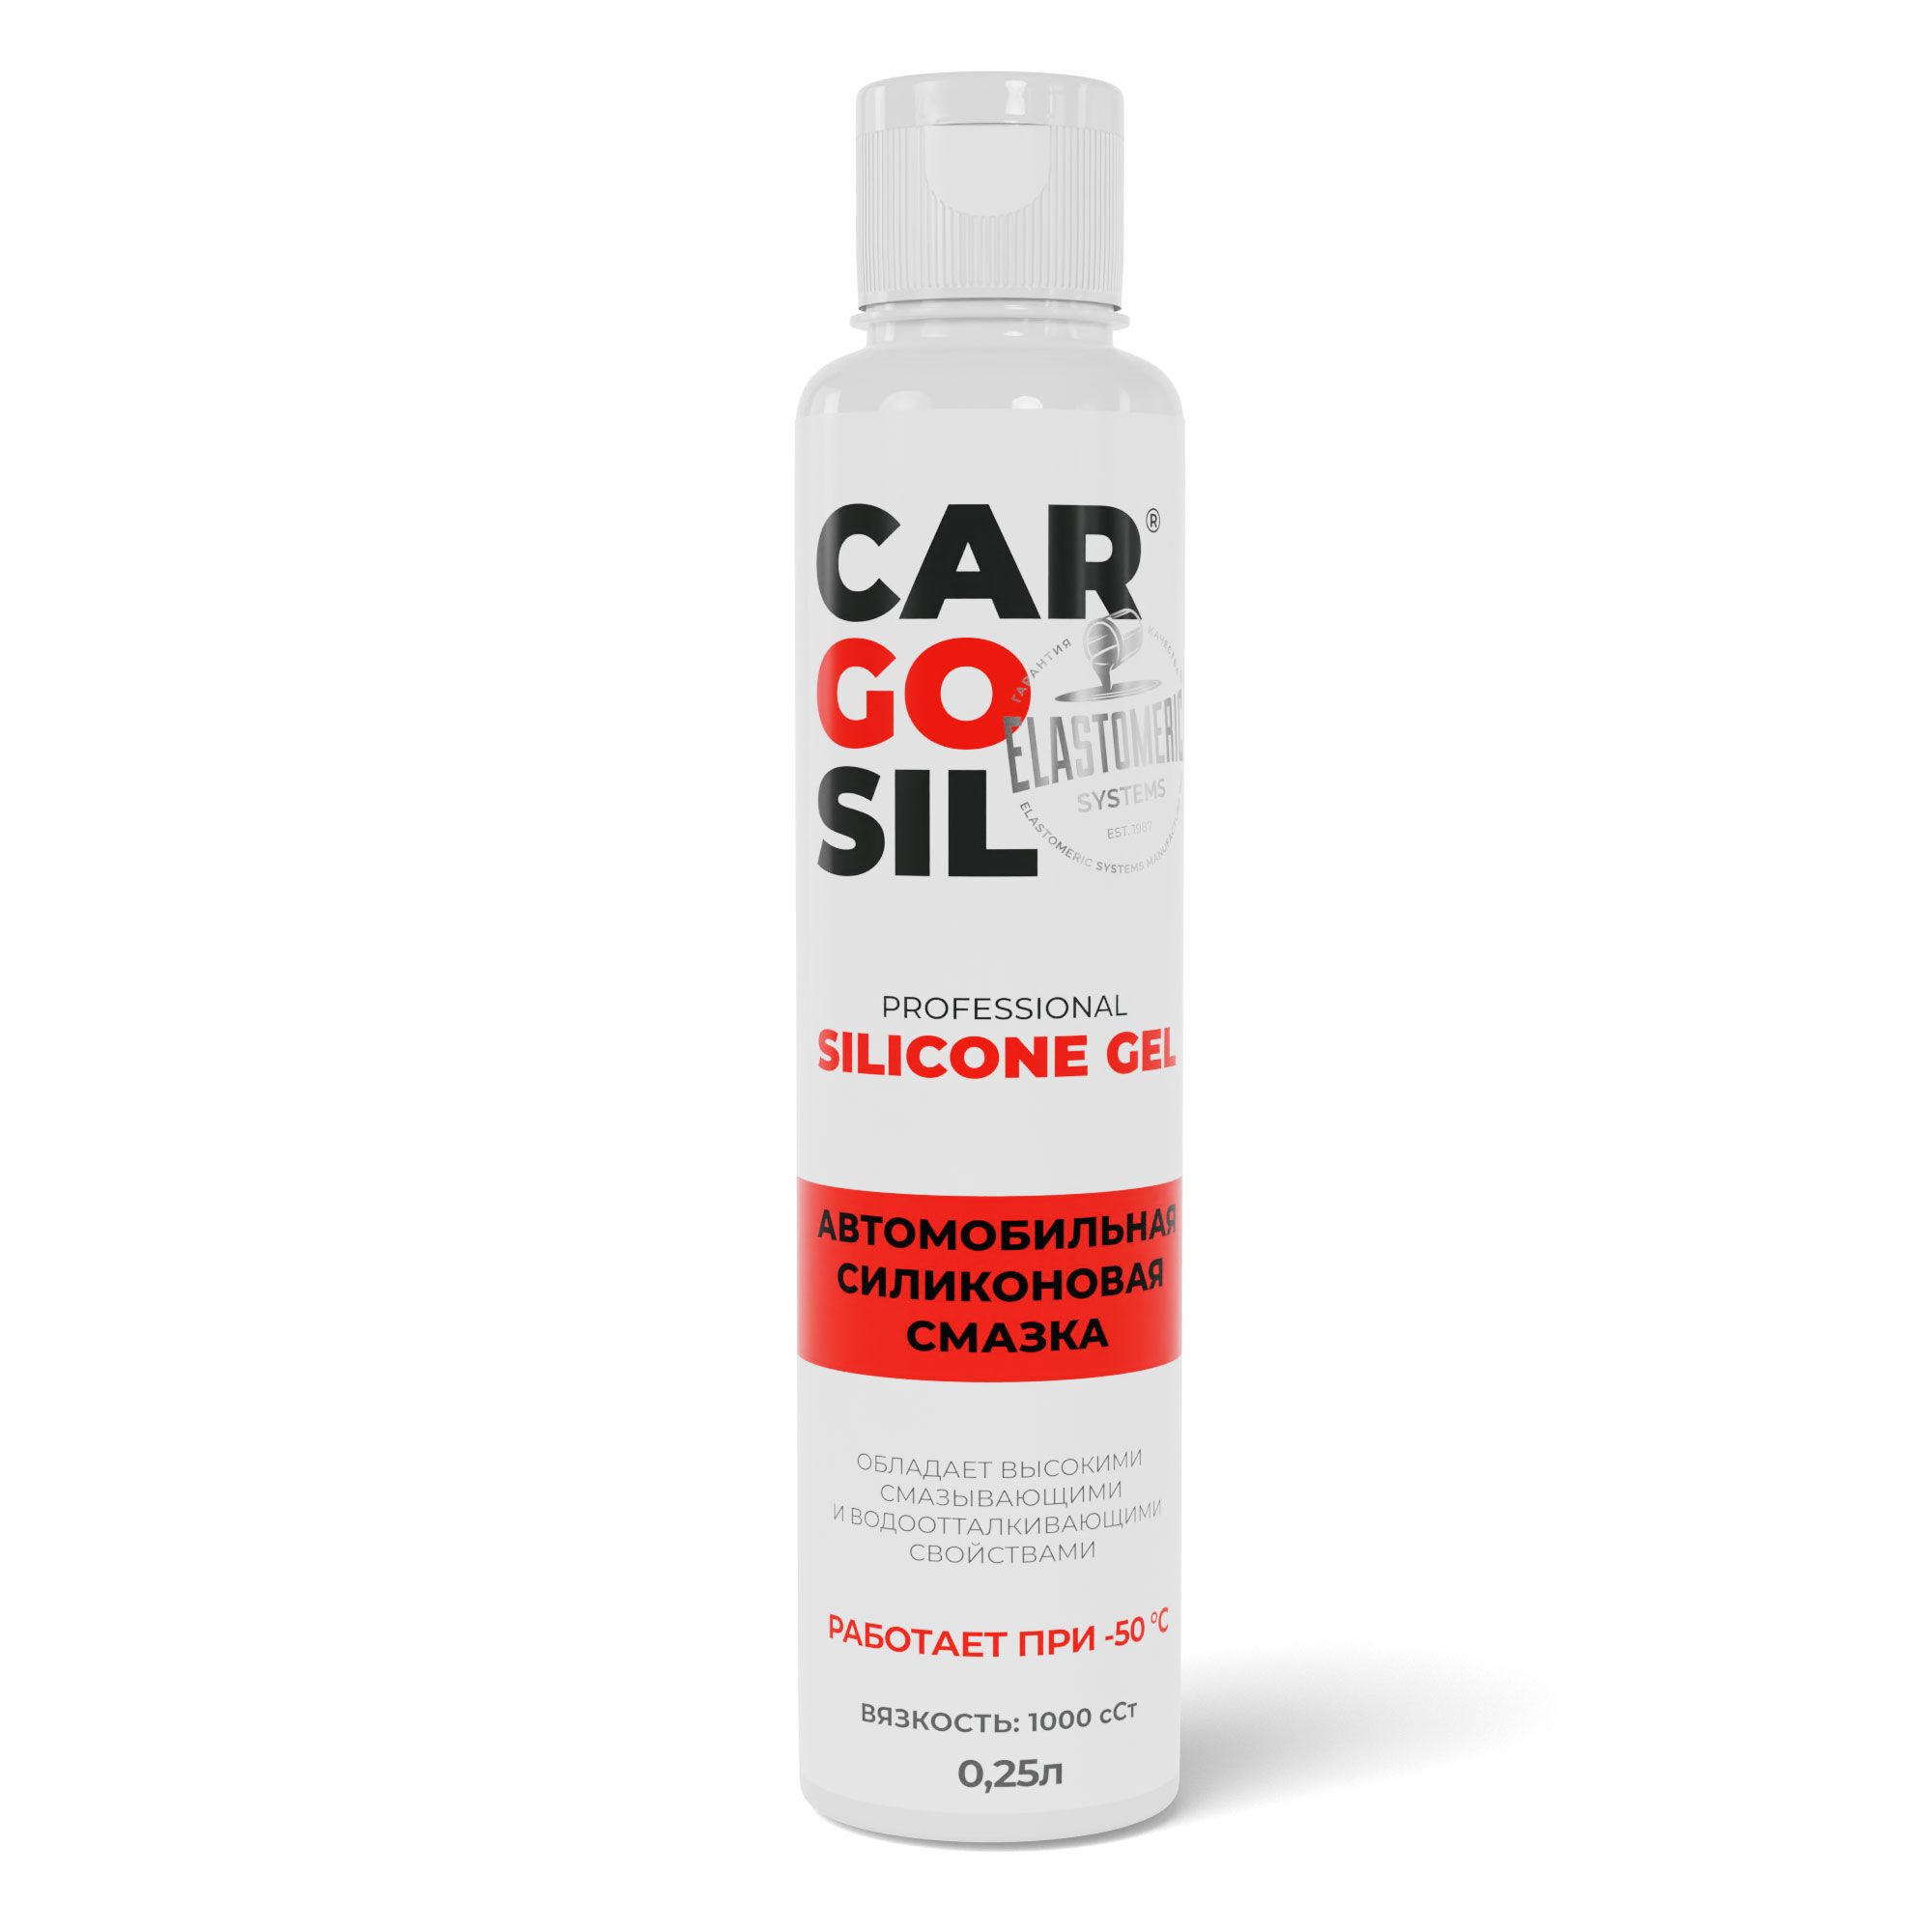 Автомобильная силиконовая смазка CARGOSIL prosessional silicone gel 1000cCt 250ml